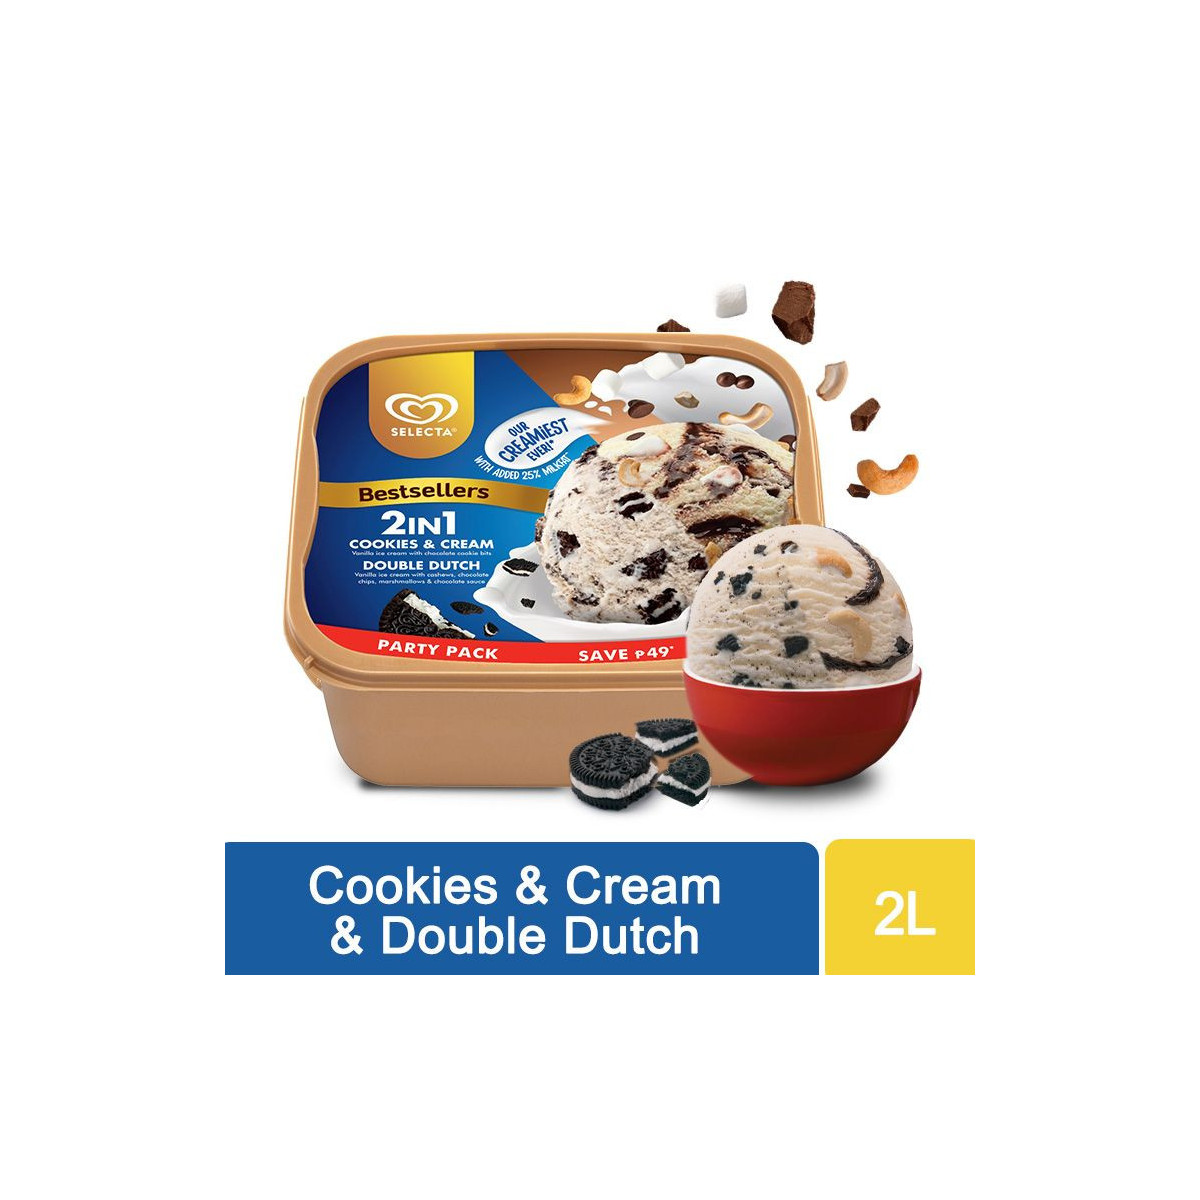 Selecta 2 in 1 Double Dutch - Cookies & Cream Ice Cream 2L